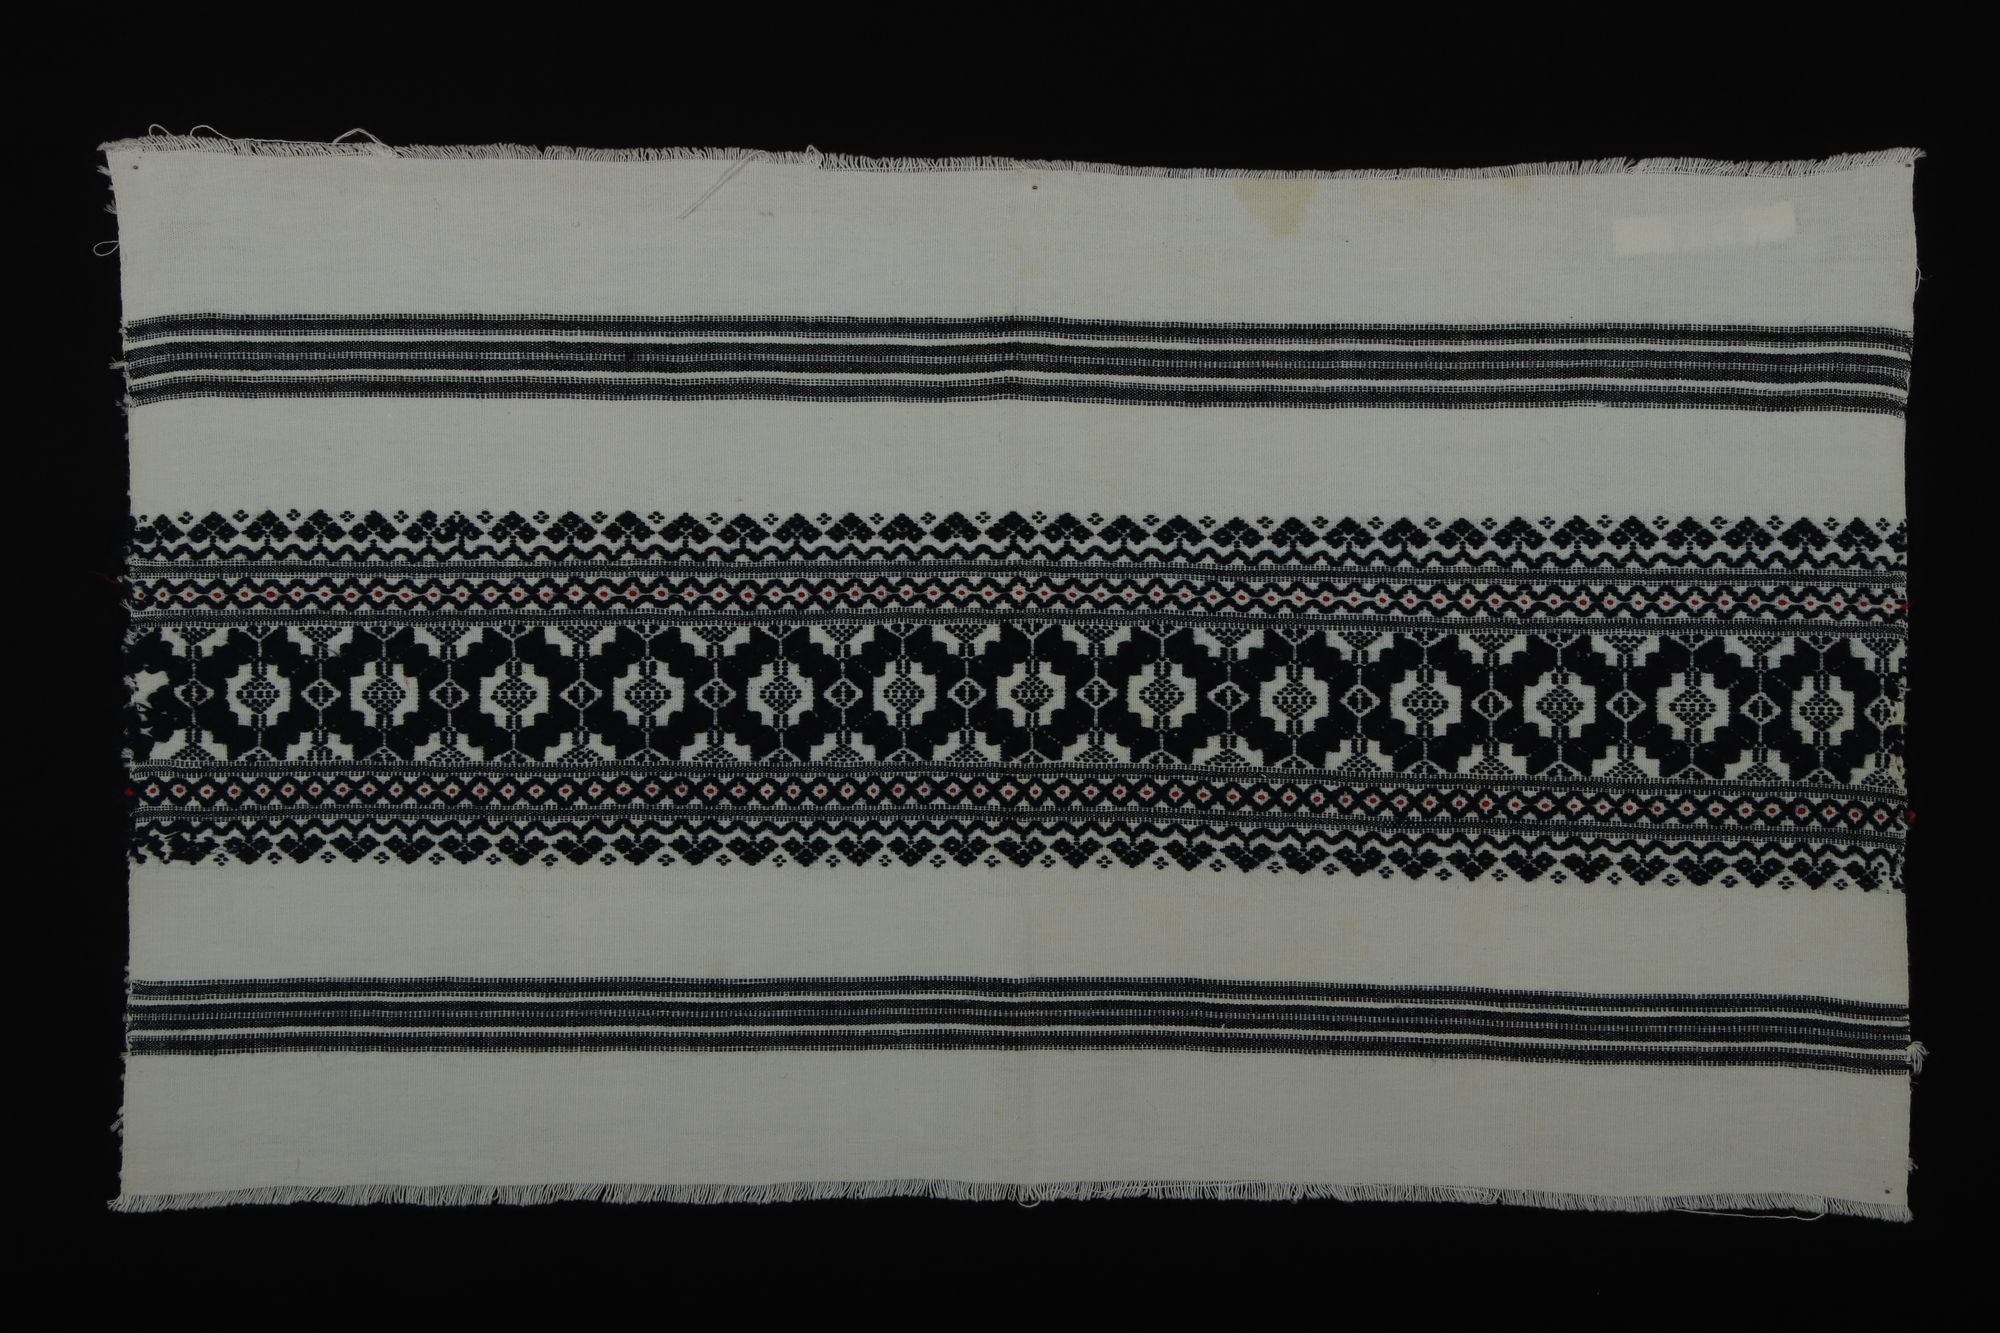 Halottas díszkendő darabja (Rippl-Rónai Múzeum CC BY-NC-SA)